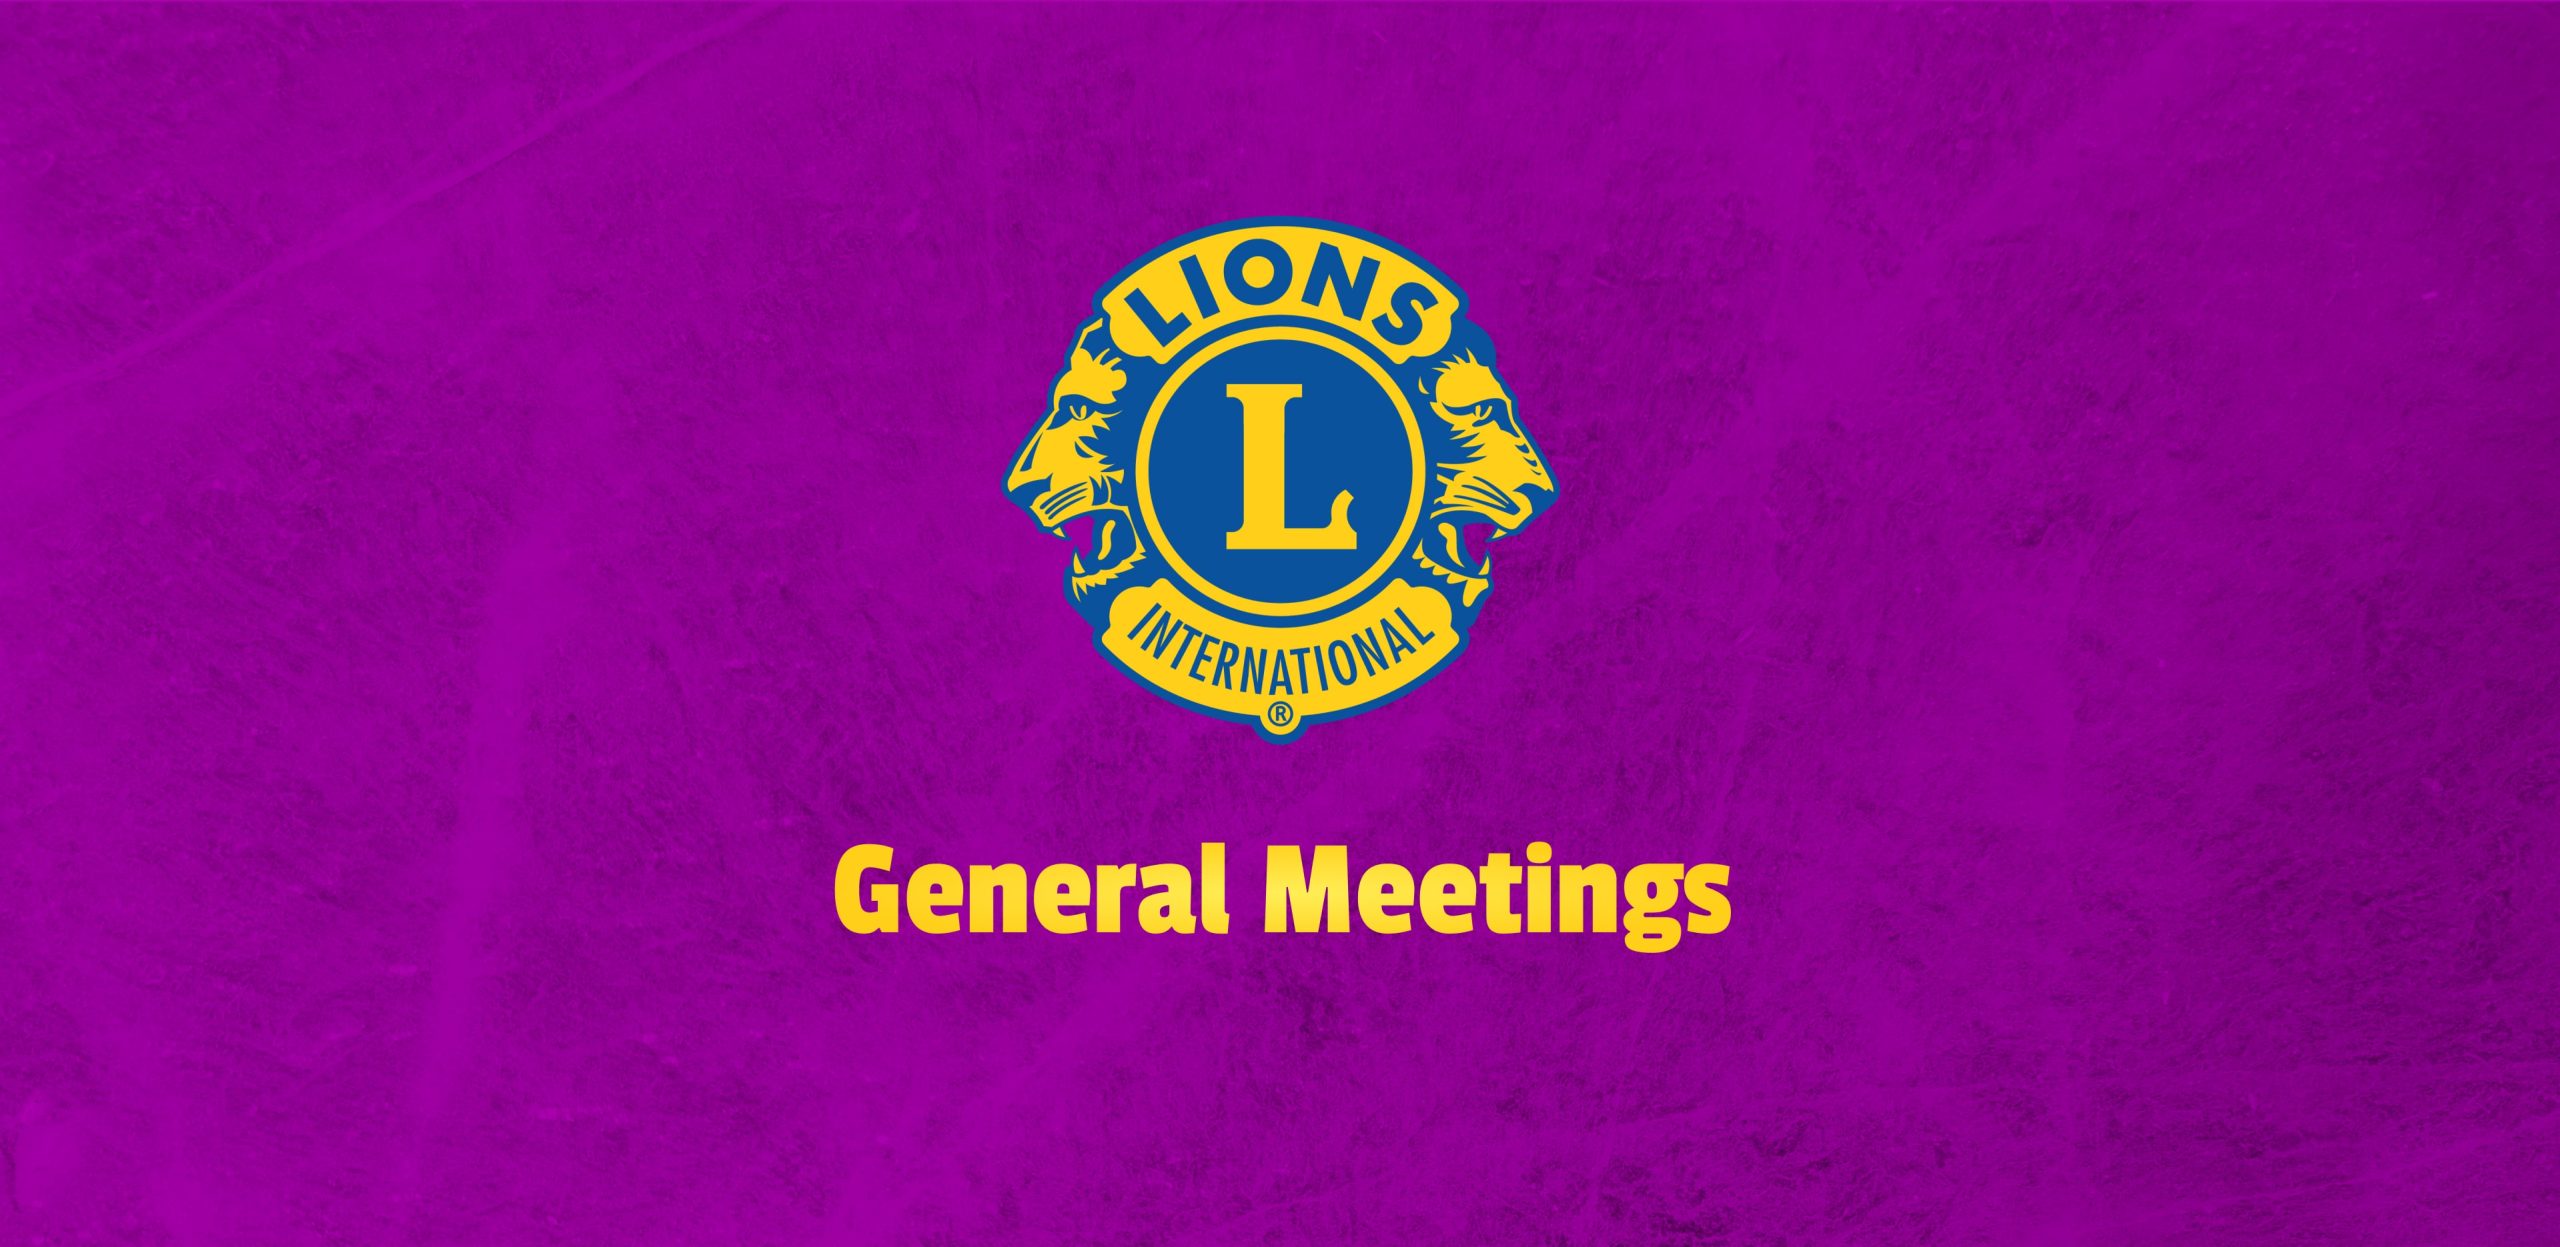 Bel Air Lions Club - General Membership Meetings